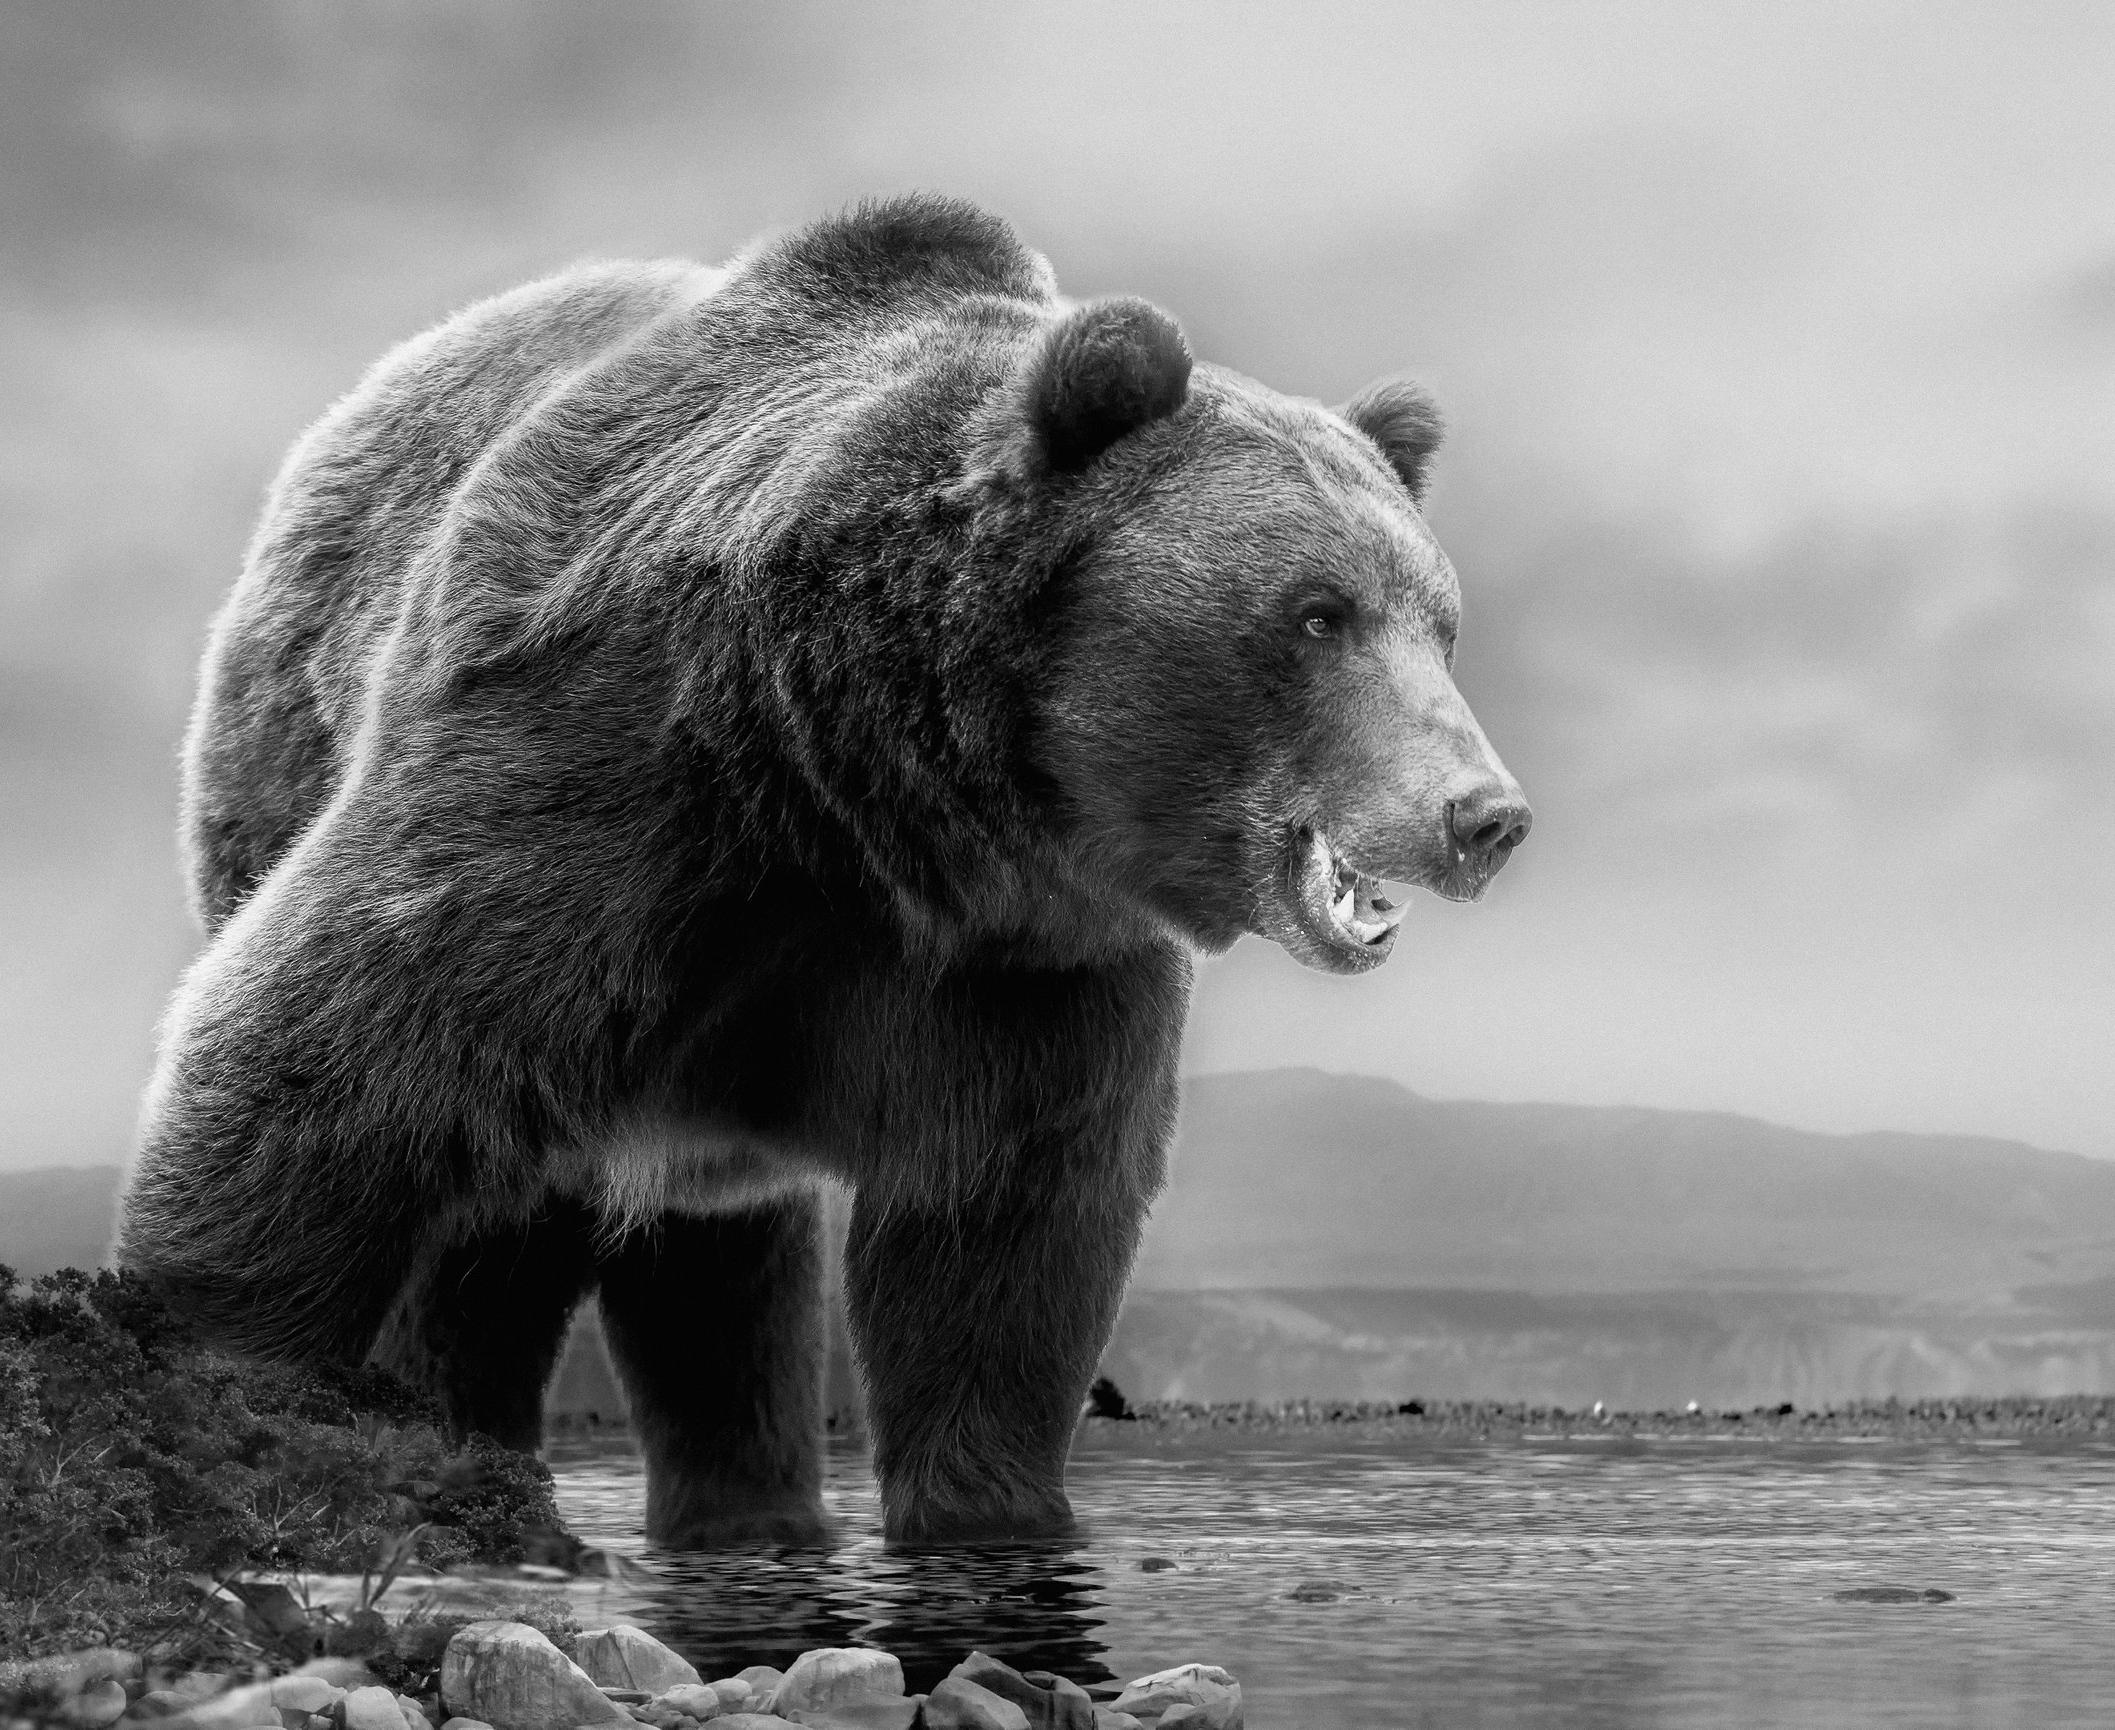 Animal Print Shane Russeck - "On The Waterfront" 36x48 Photographie en noir et blanc Ours Grizzly Kodiak Signée